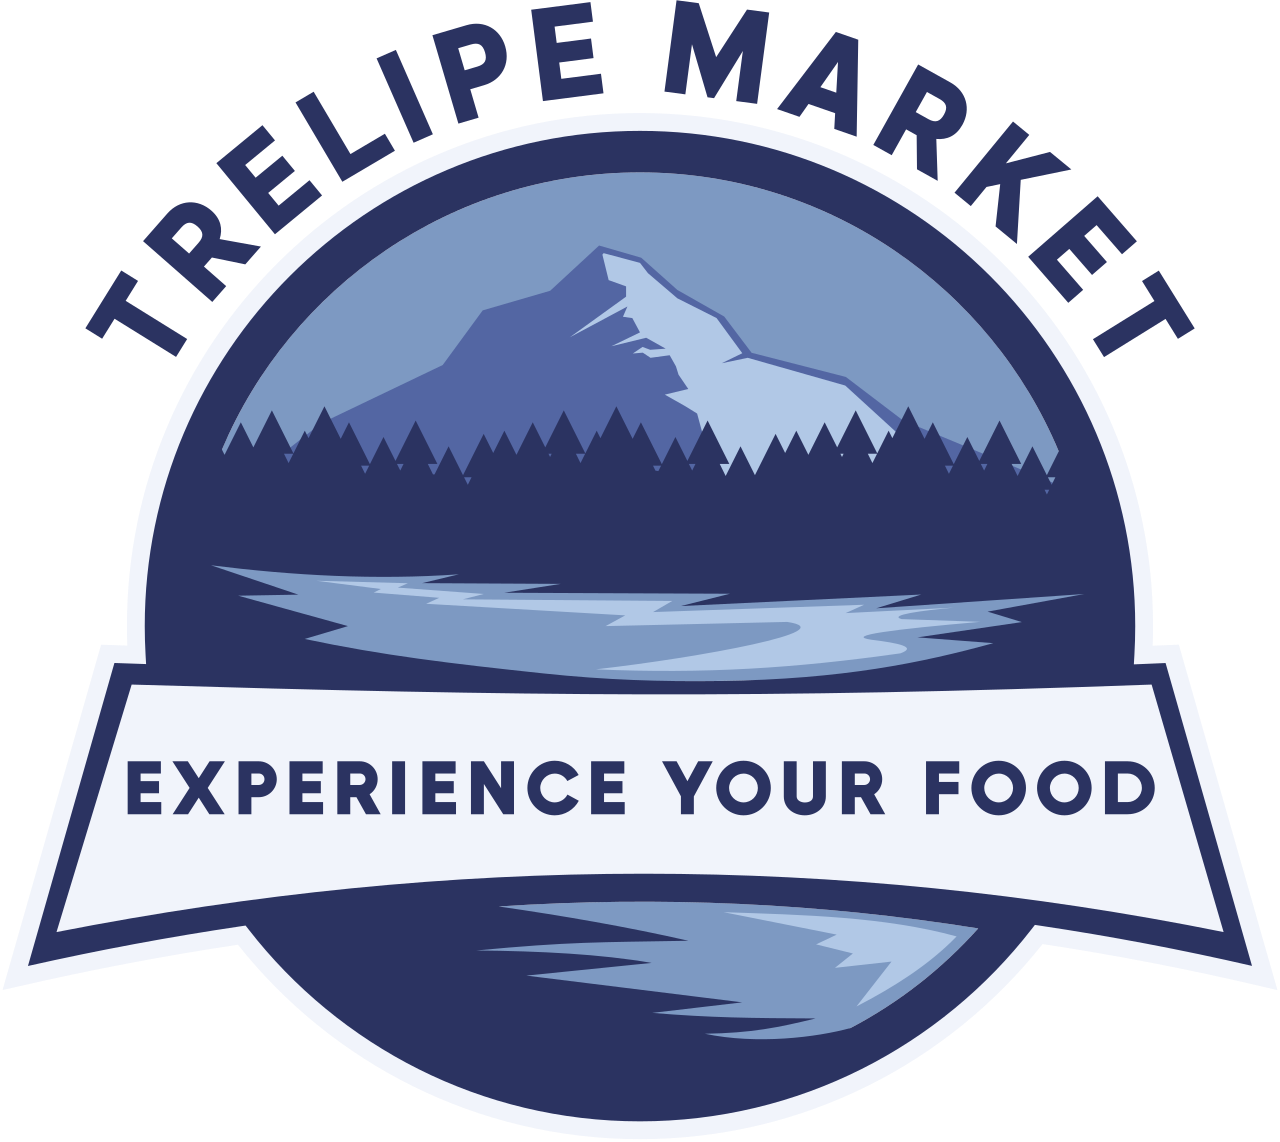 TRELIPE MARKET's logo